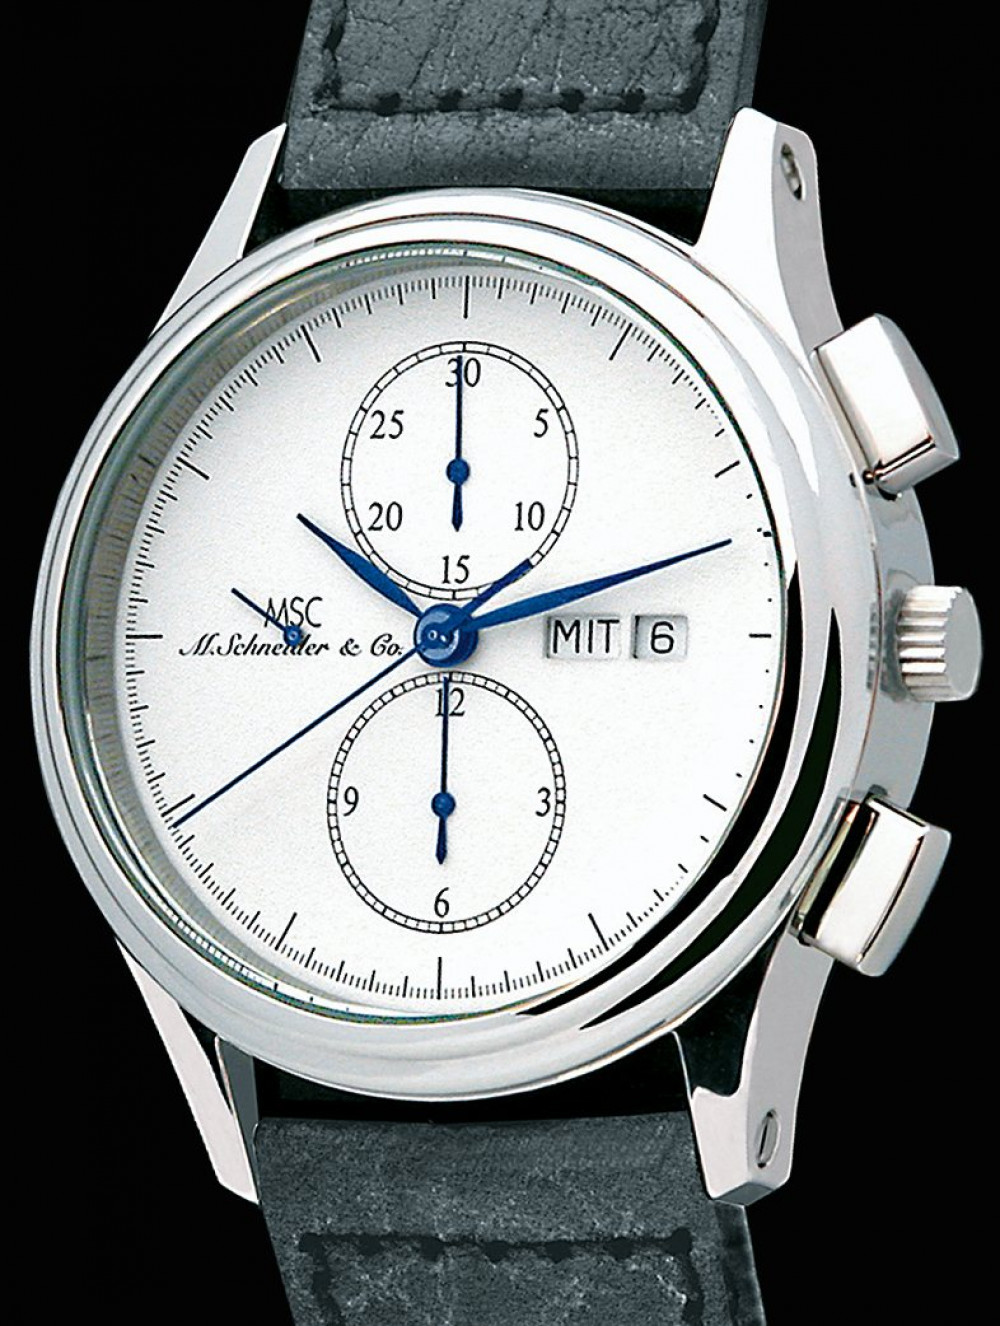 Zegarek firmy MSC M. Schneider & Co., model Chronos M5